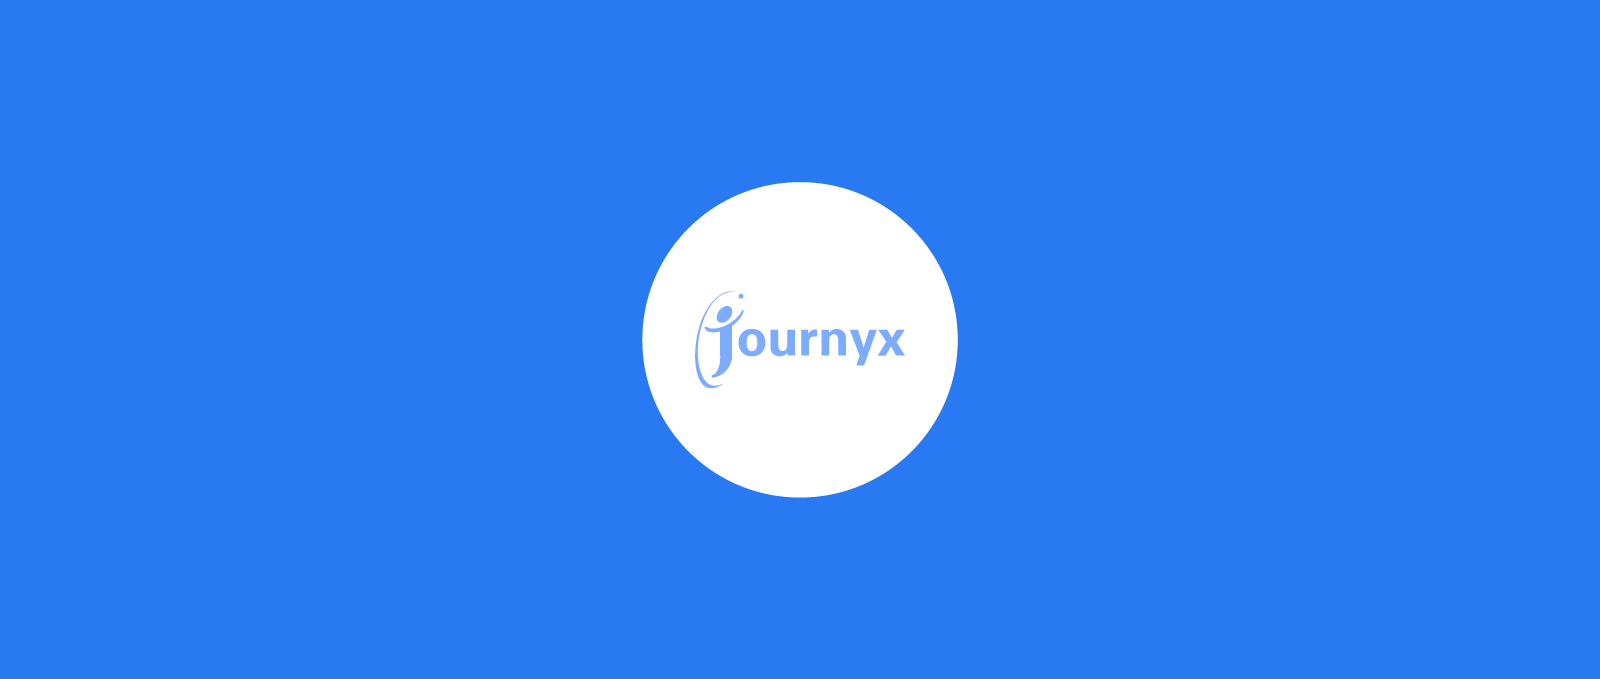 Journyx_Case-Study_Header